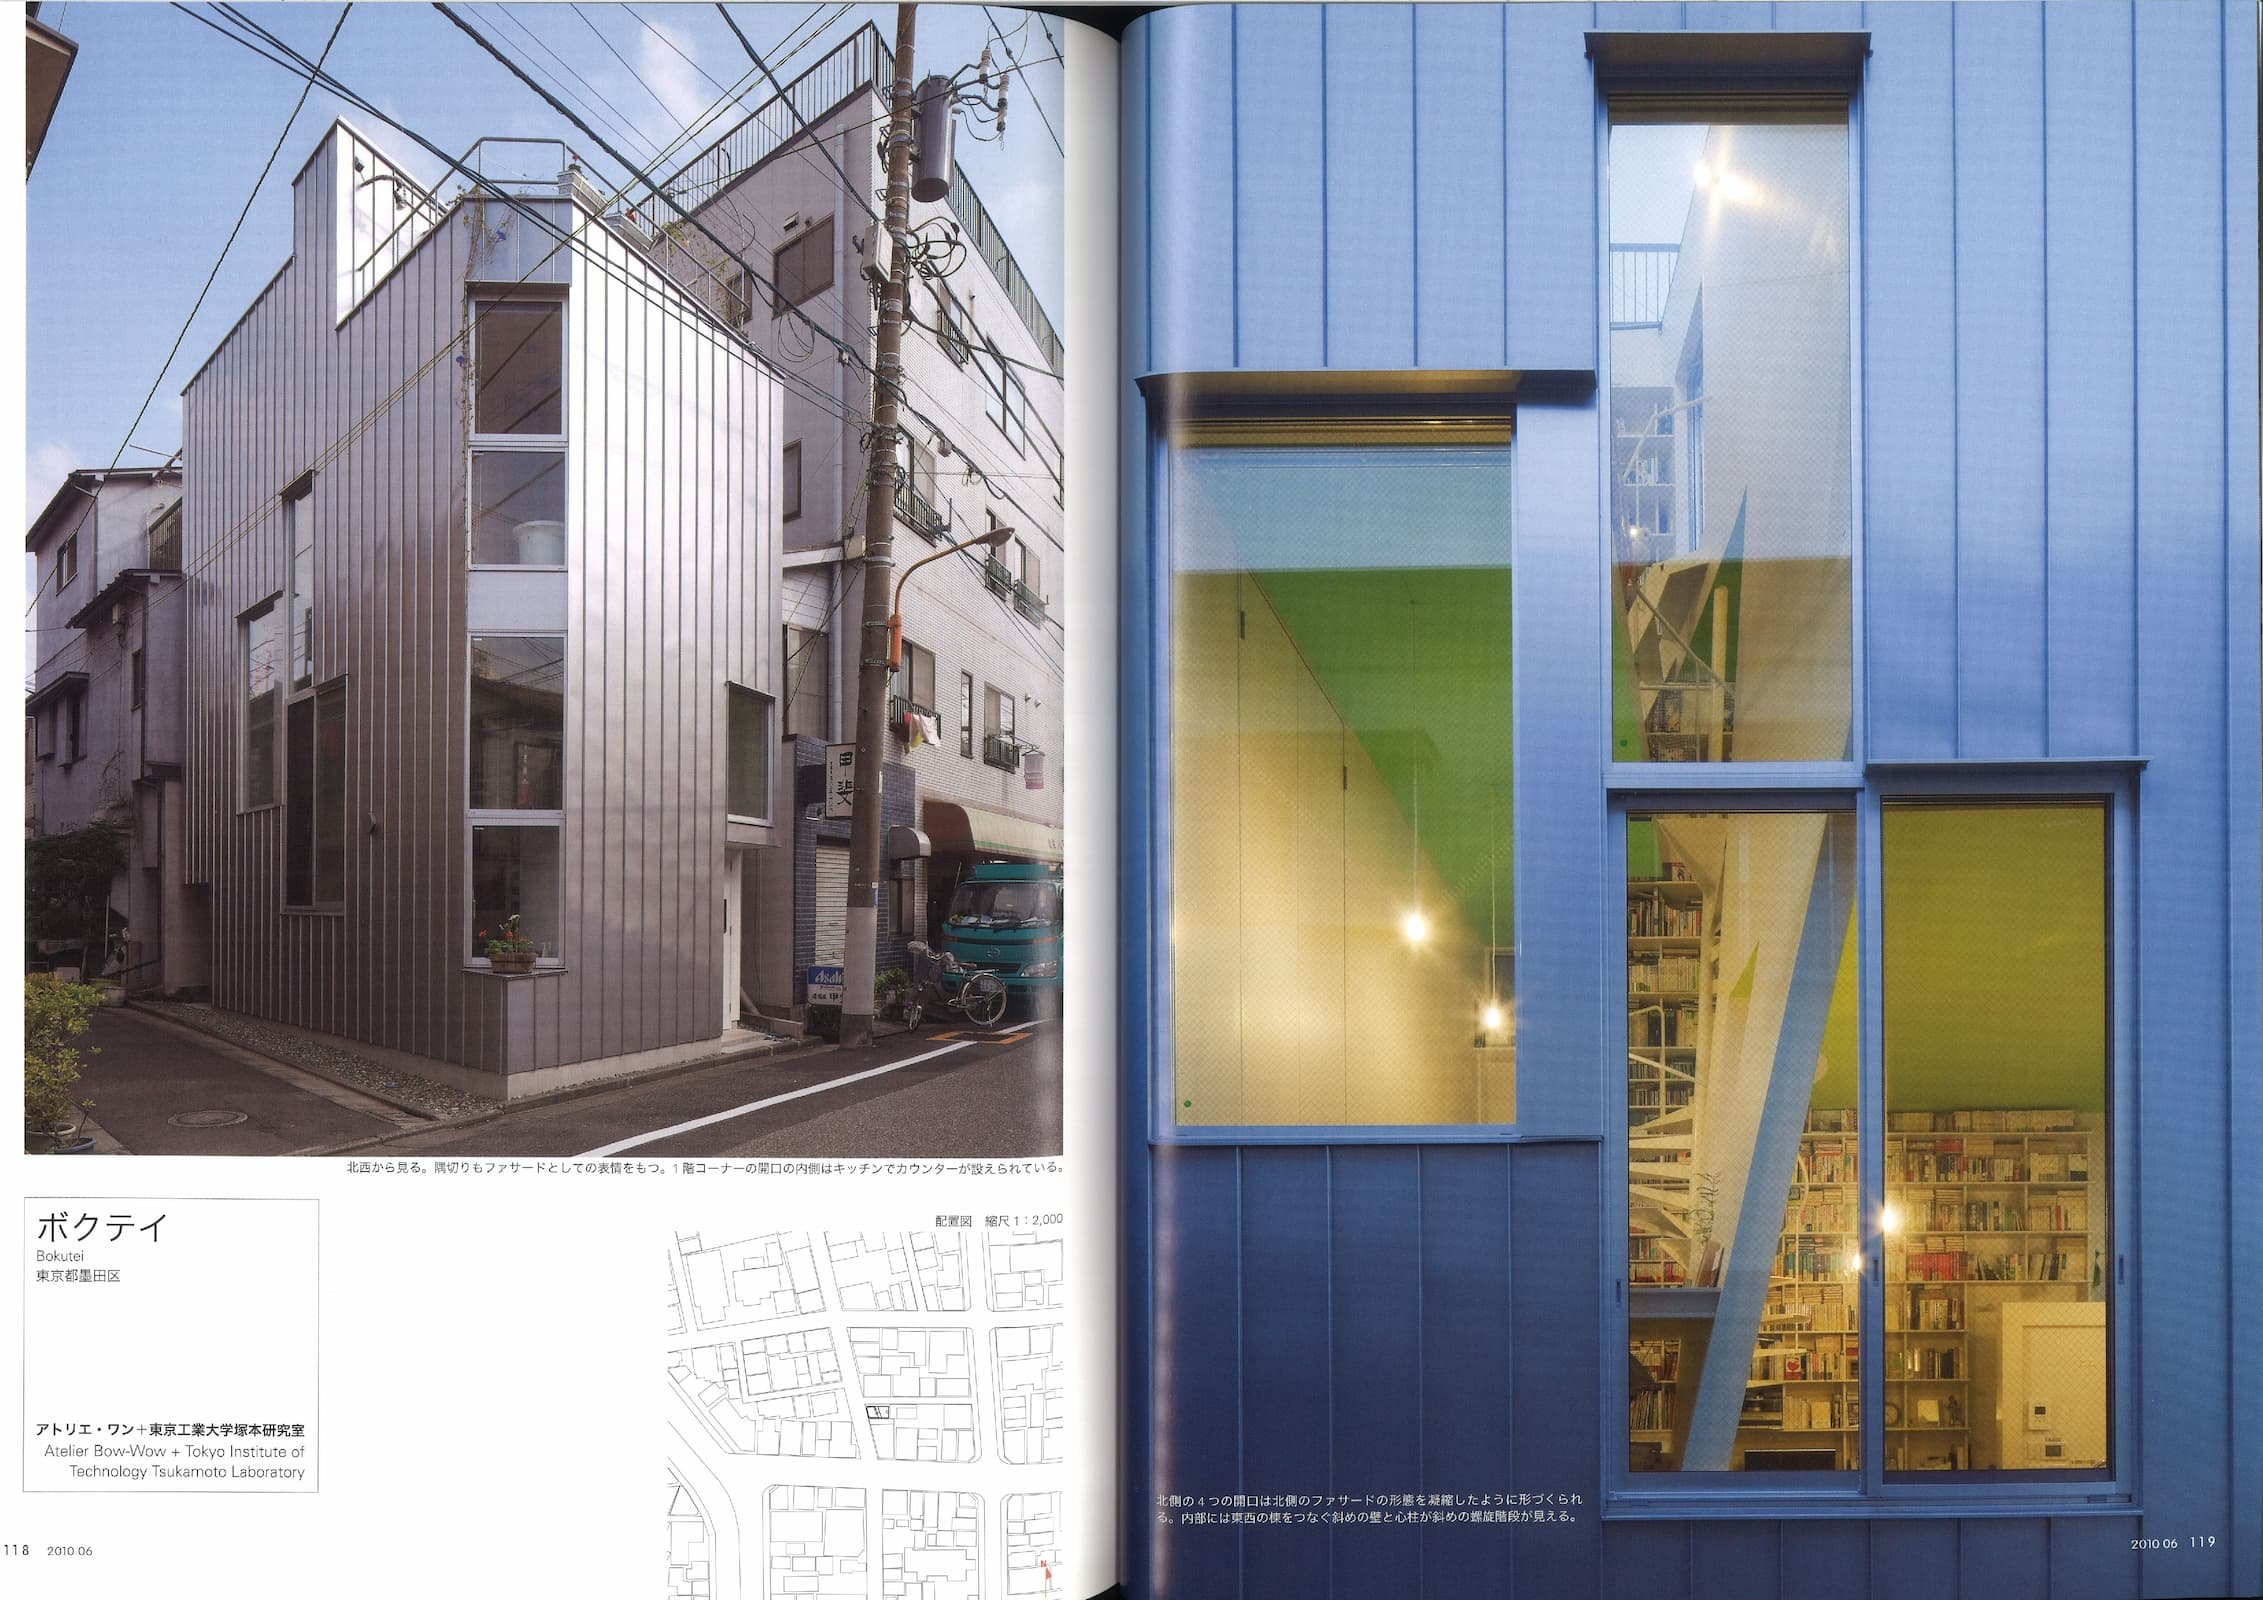 住宅特集 - Housing Special Feature 290 - Bokutei_Page_2.jpg